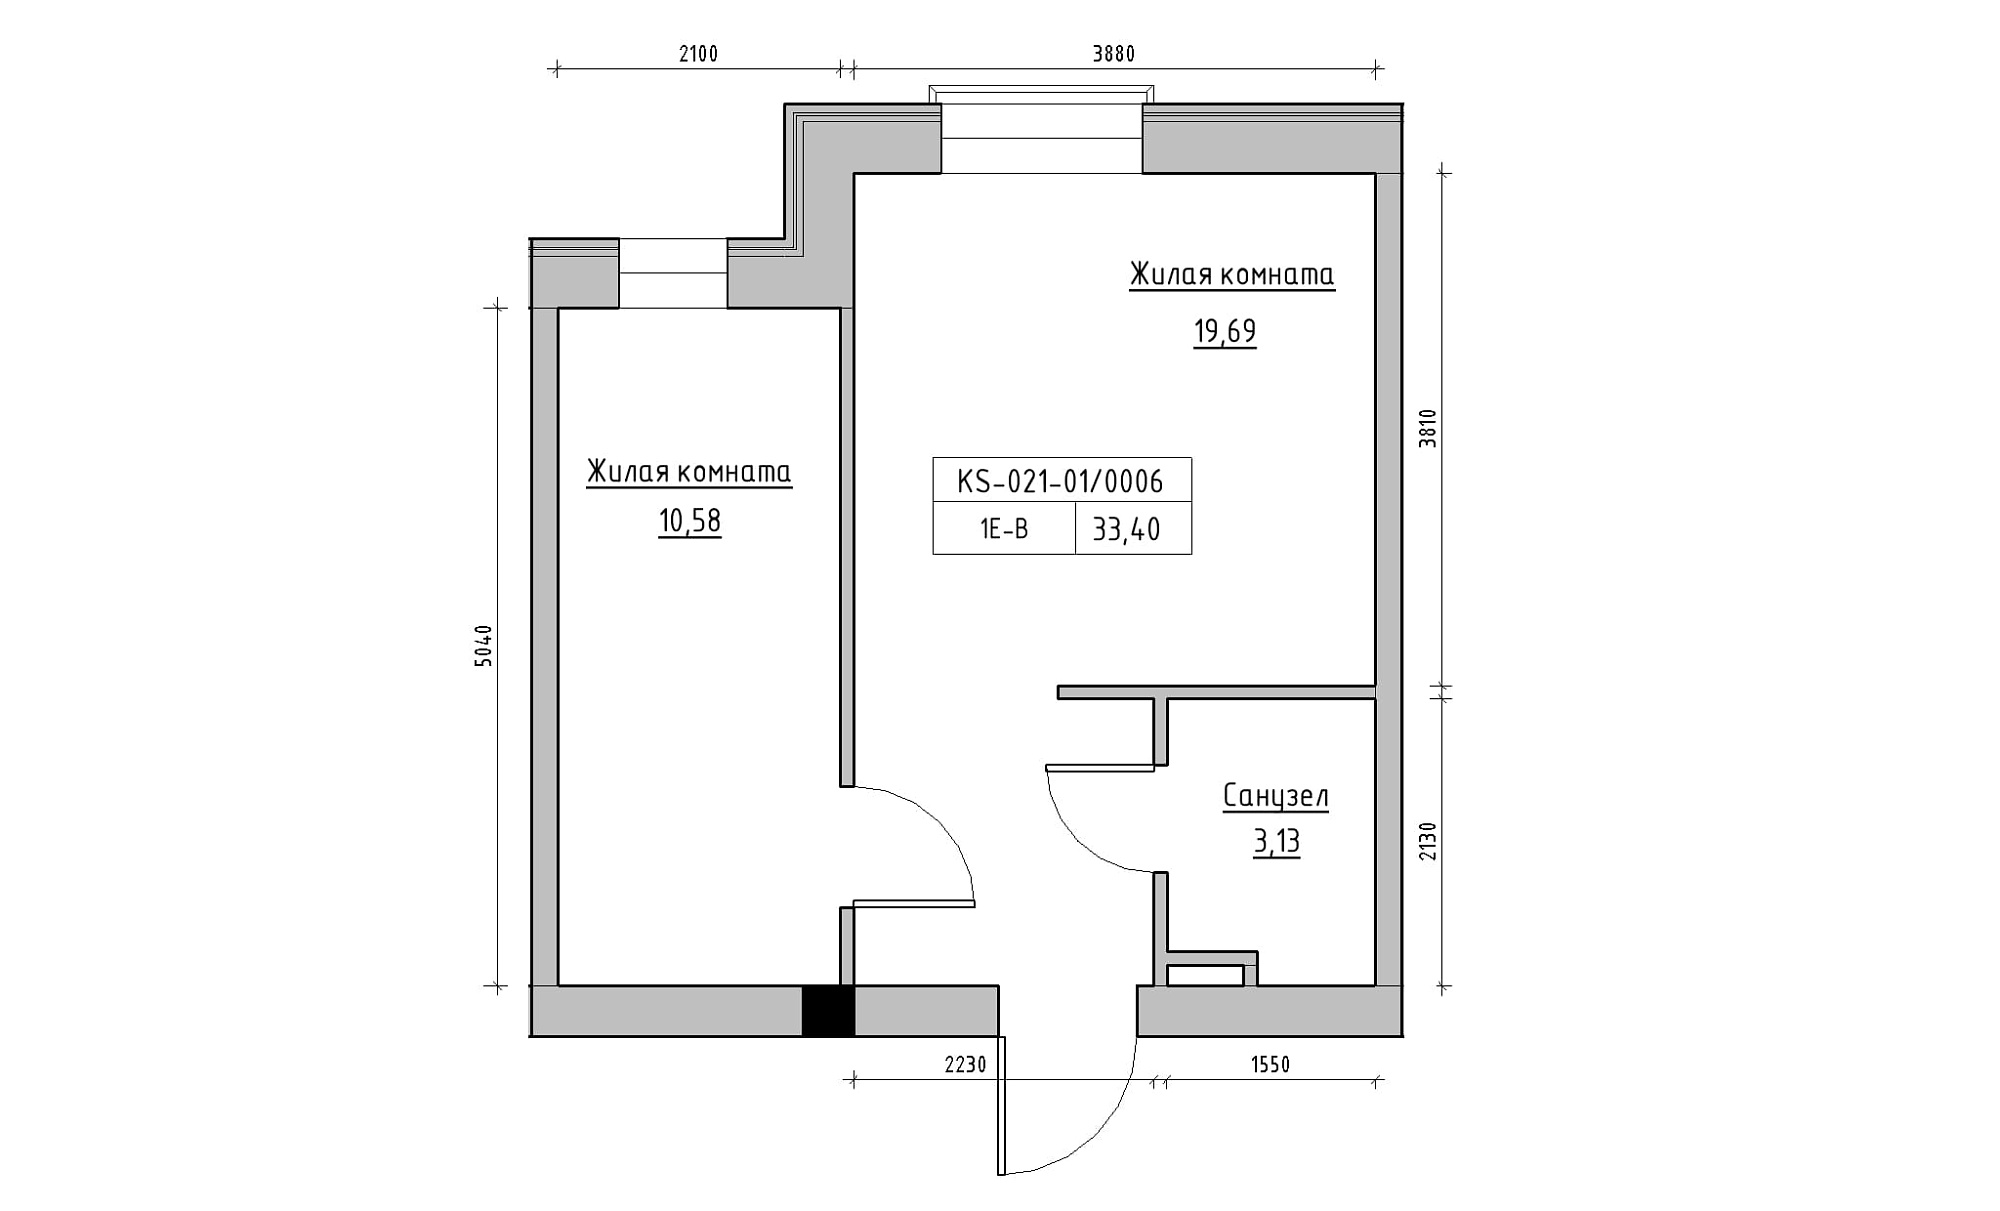 Planning 1-rm flats area 33.4m2, KS-021-01/0006.